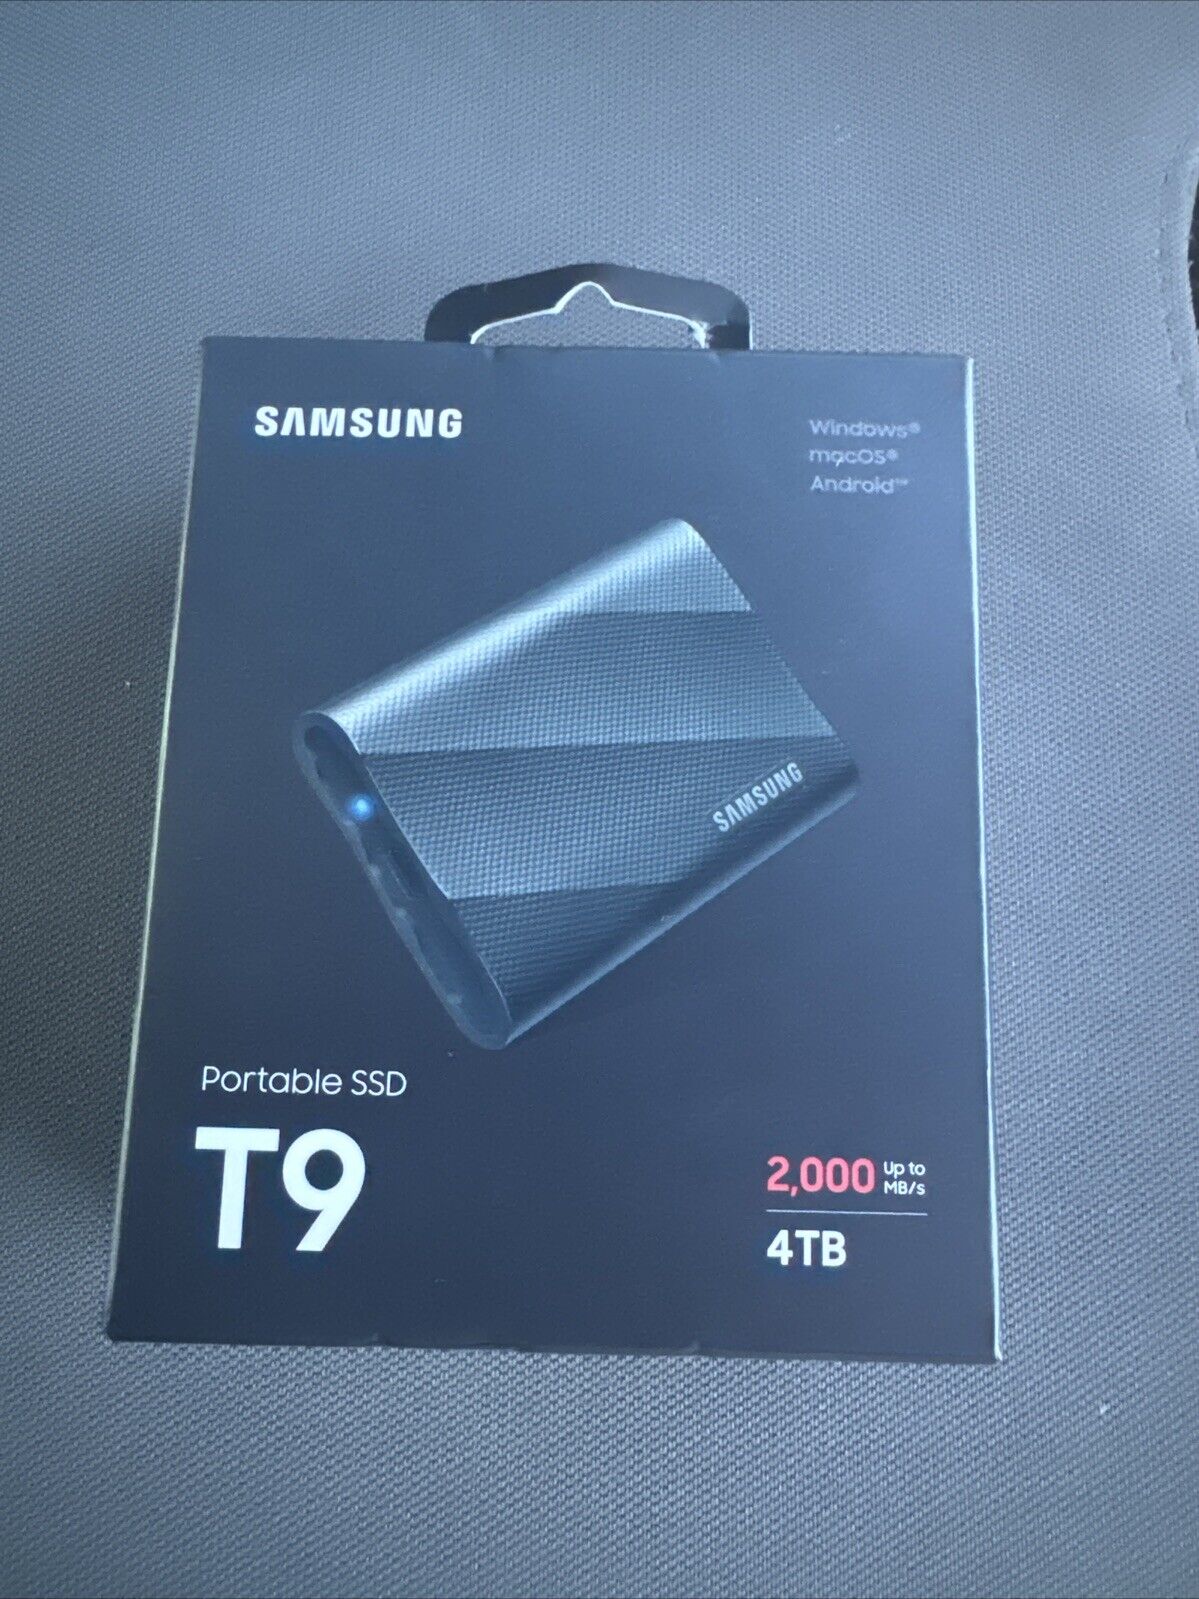 Samsung - T9 Portable SSD 4TB, Up to 2,000MB/s, USB 3.2 Gen2 - Black - NEW